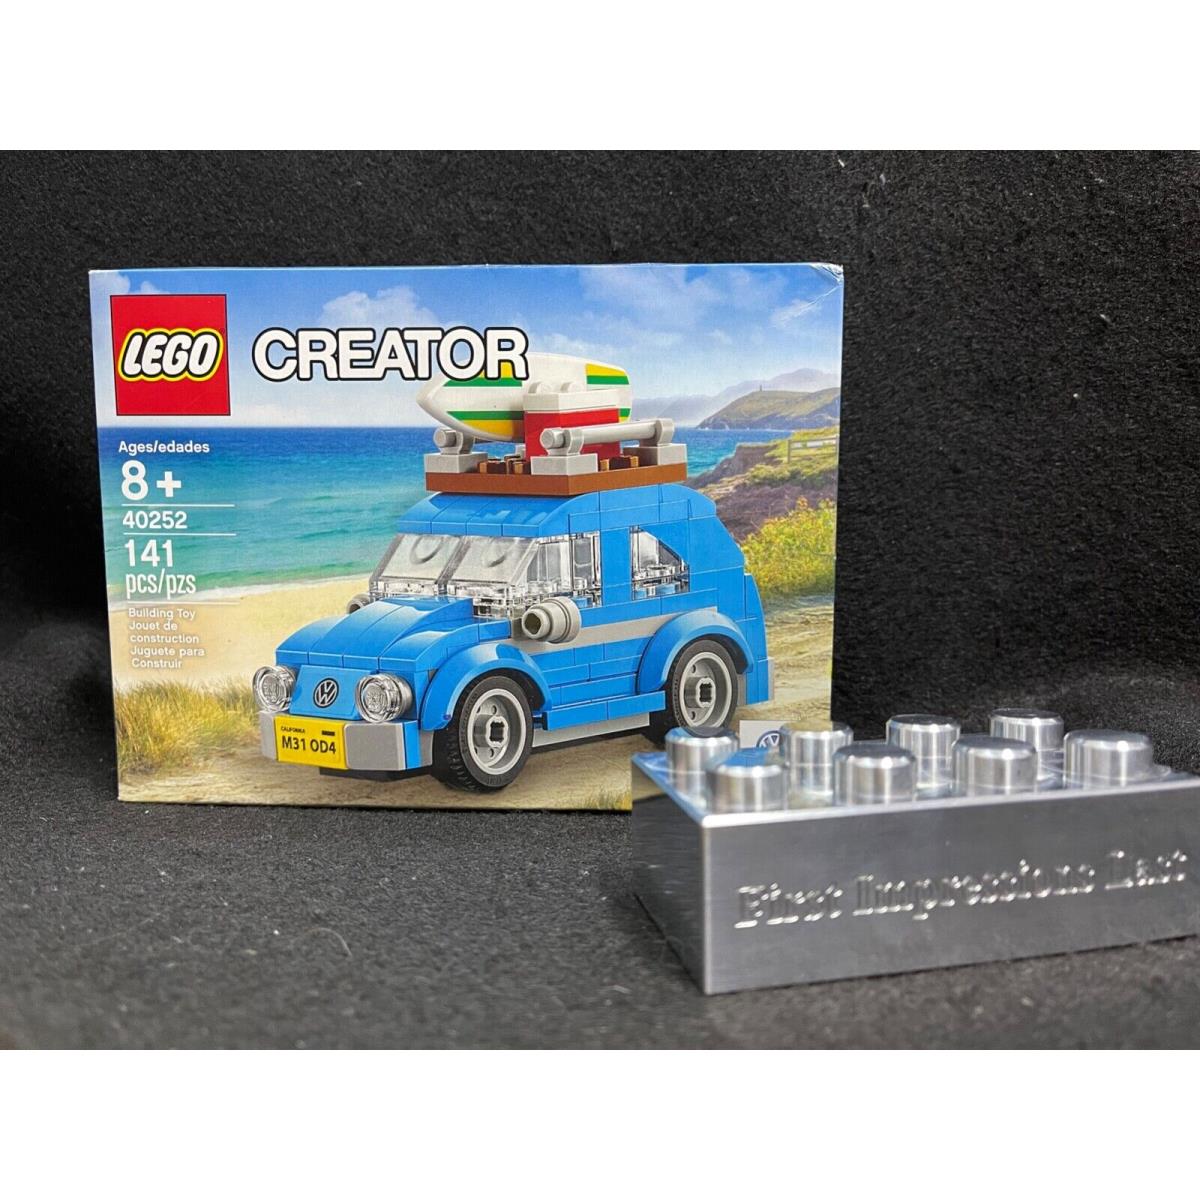 Lego 40252 2017 Creator Mini Volkswagen Beetle Nisb Retired Hard to Find Micro